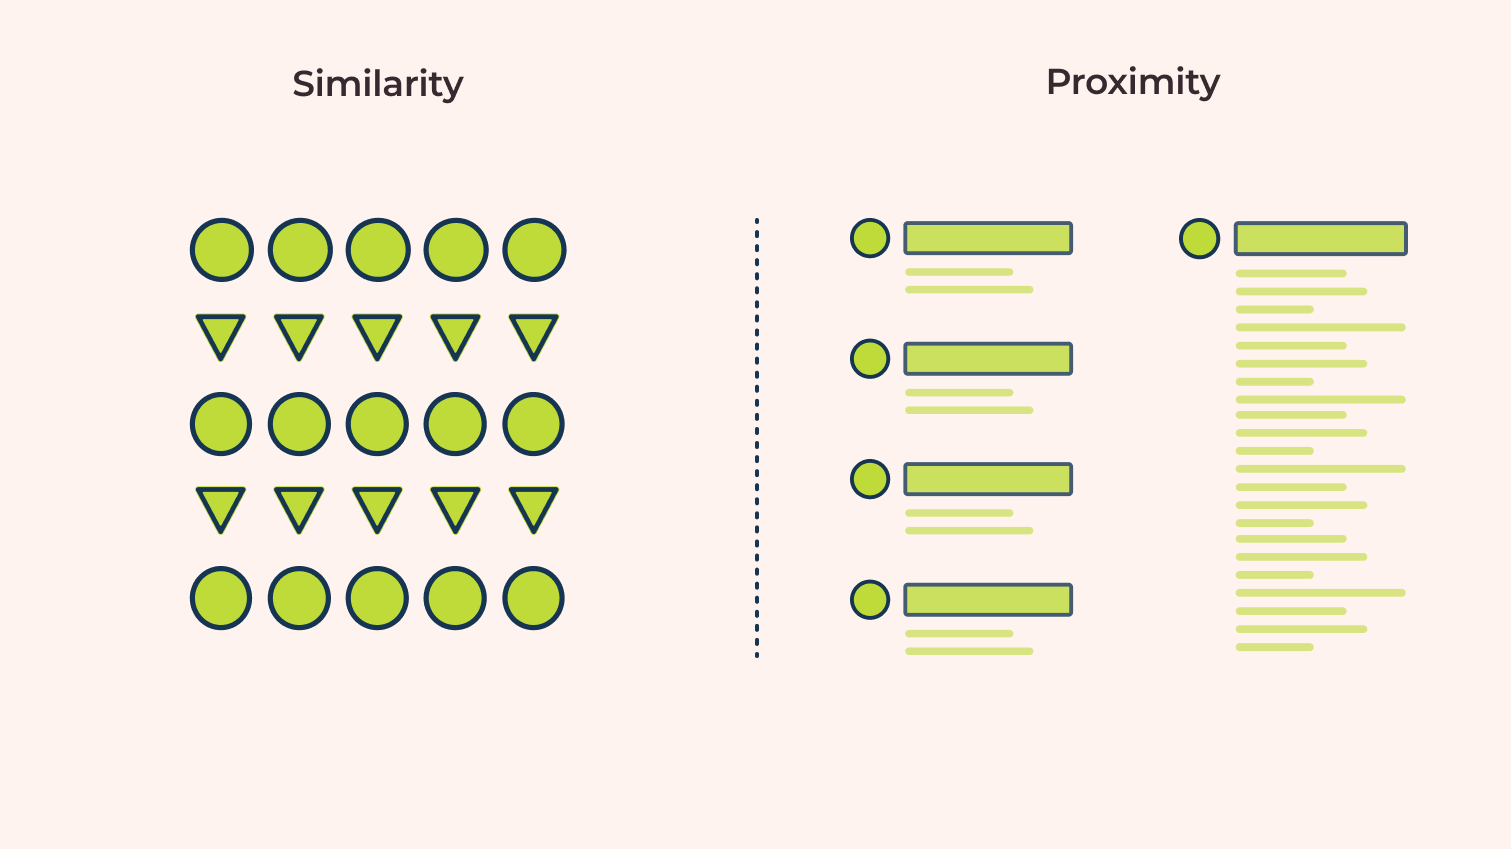 similarity gestalt principles of grouping